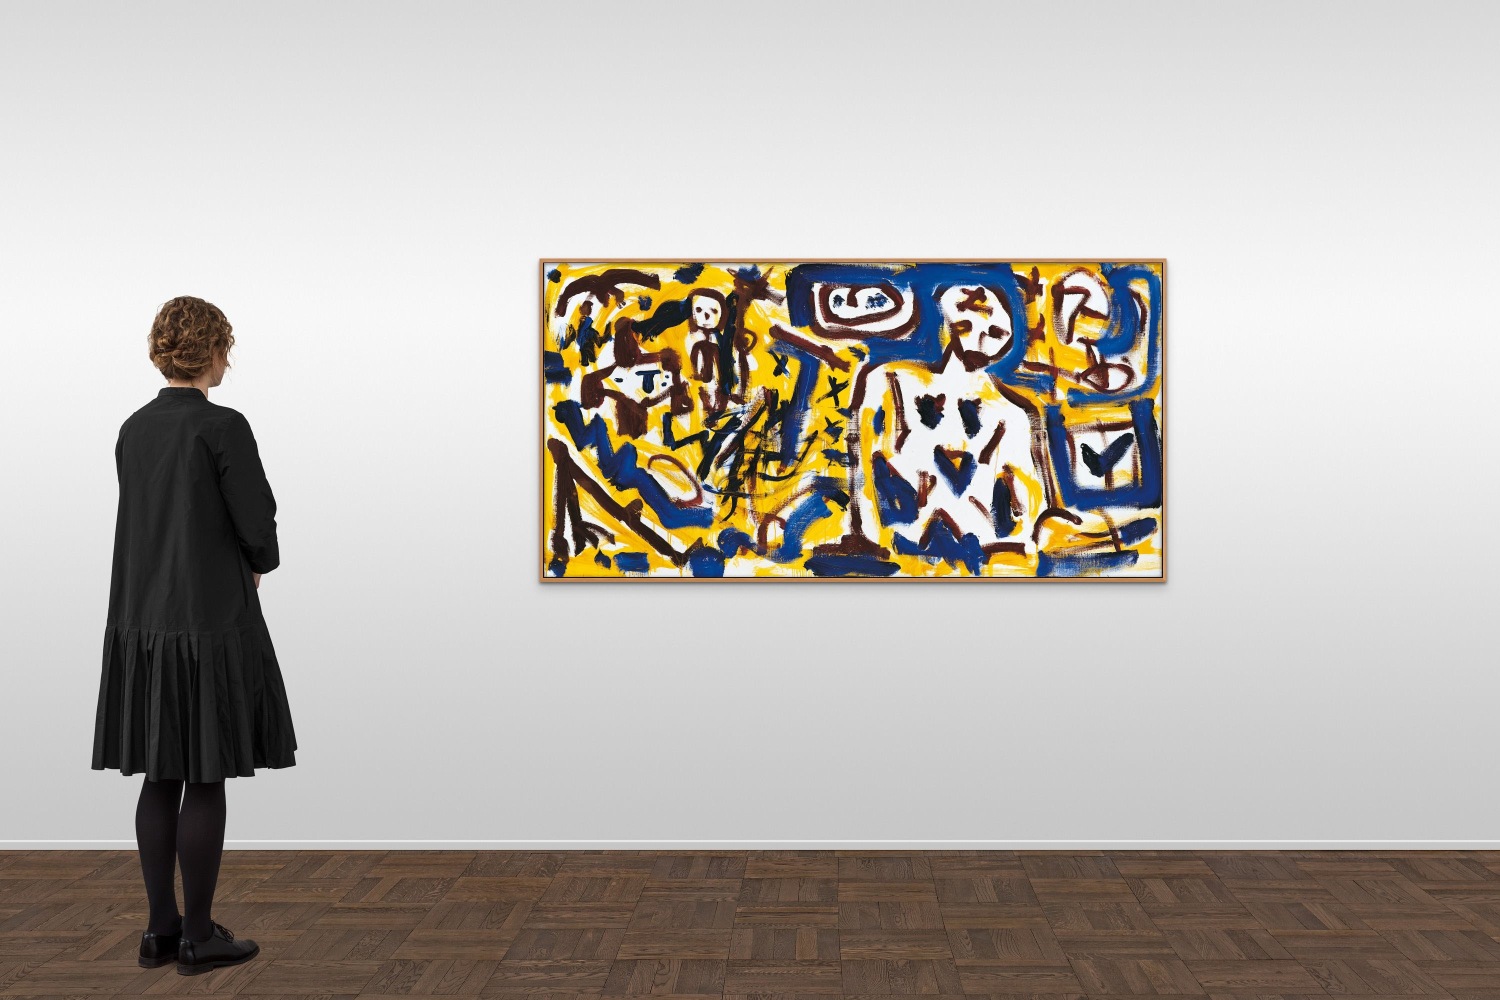 A.R. Penck
&amp;ldquo;Gelbe Nacht&amp;rdquo;, 1989
Oil on canvas
39 1/4 x 78 3/4 inches
100 x 200 cm
RP 594